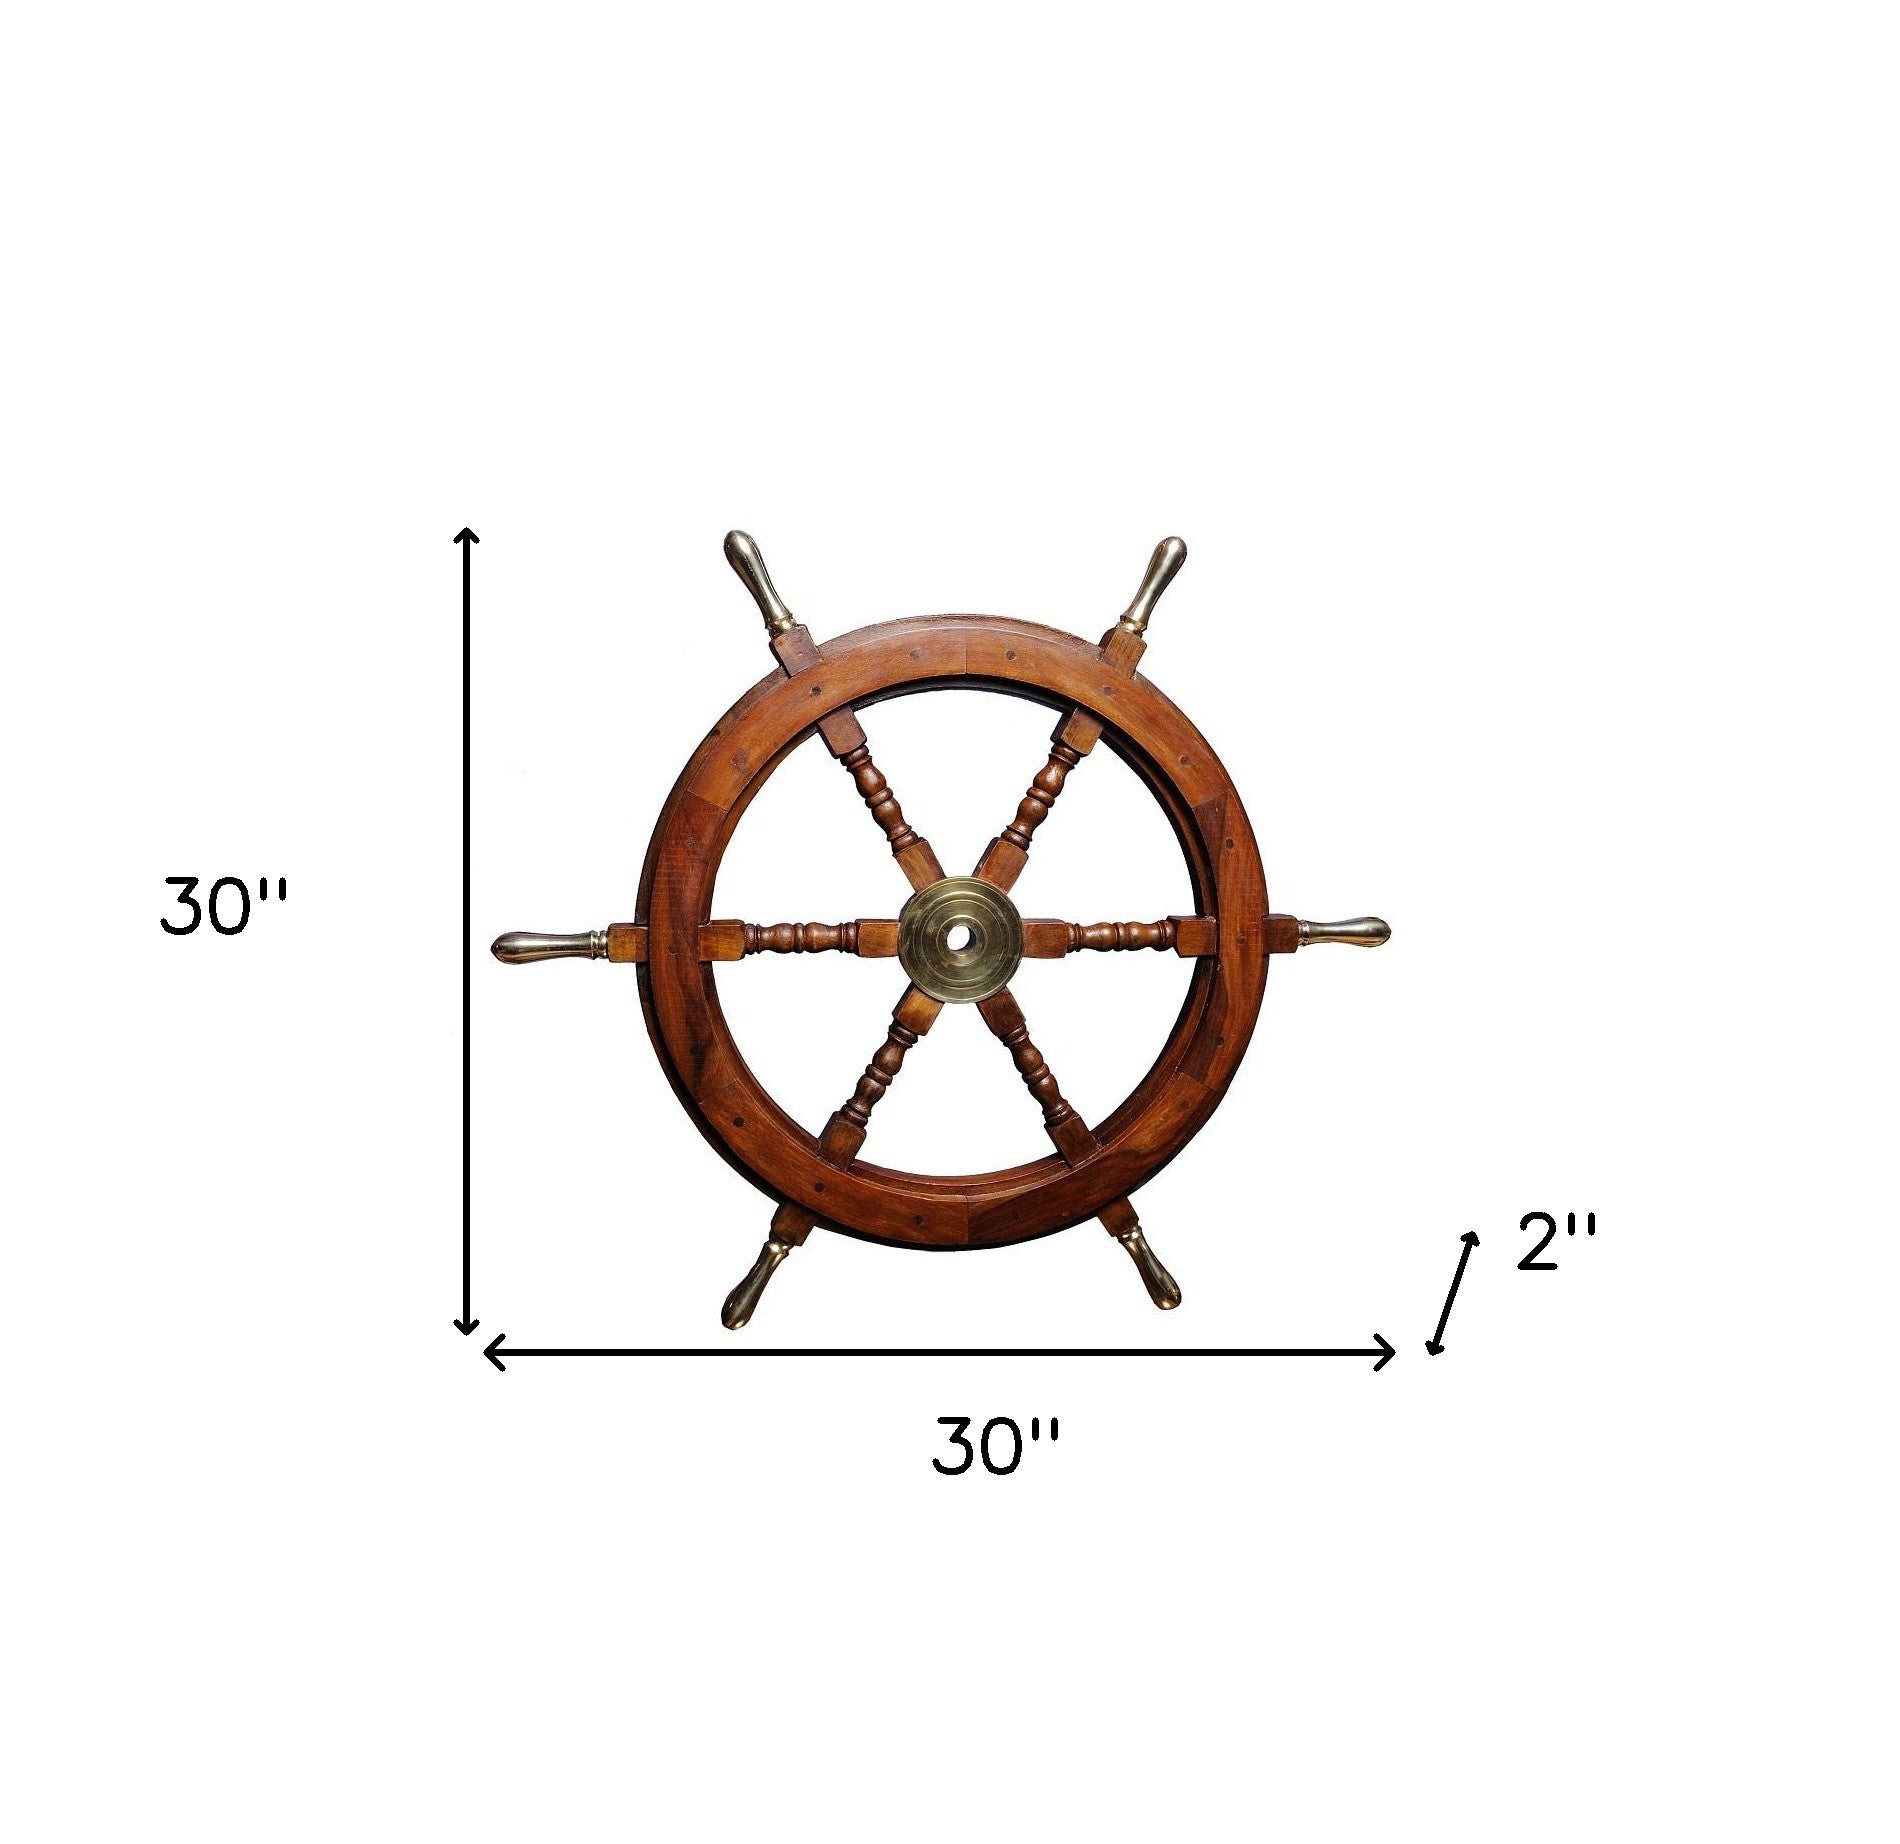 30" X 30" X 2" Ship Wheel